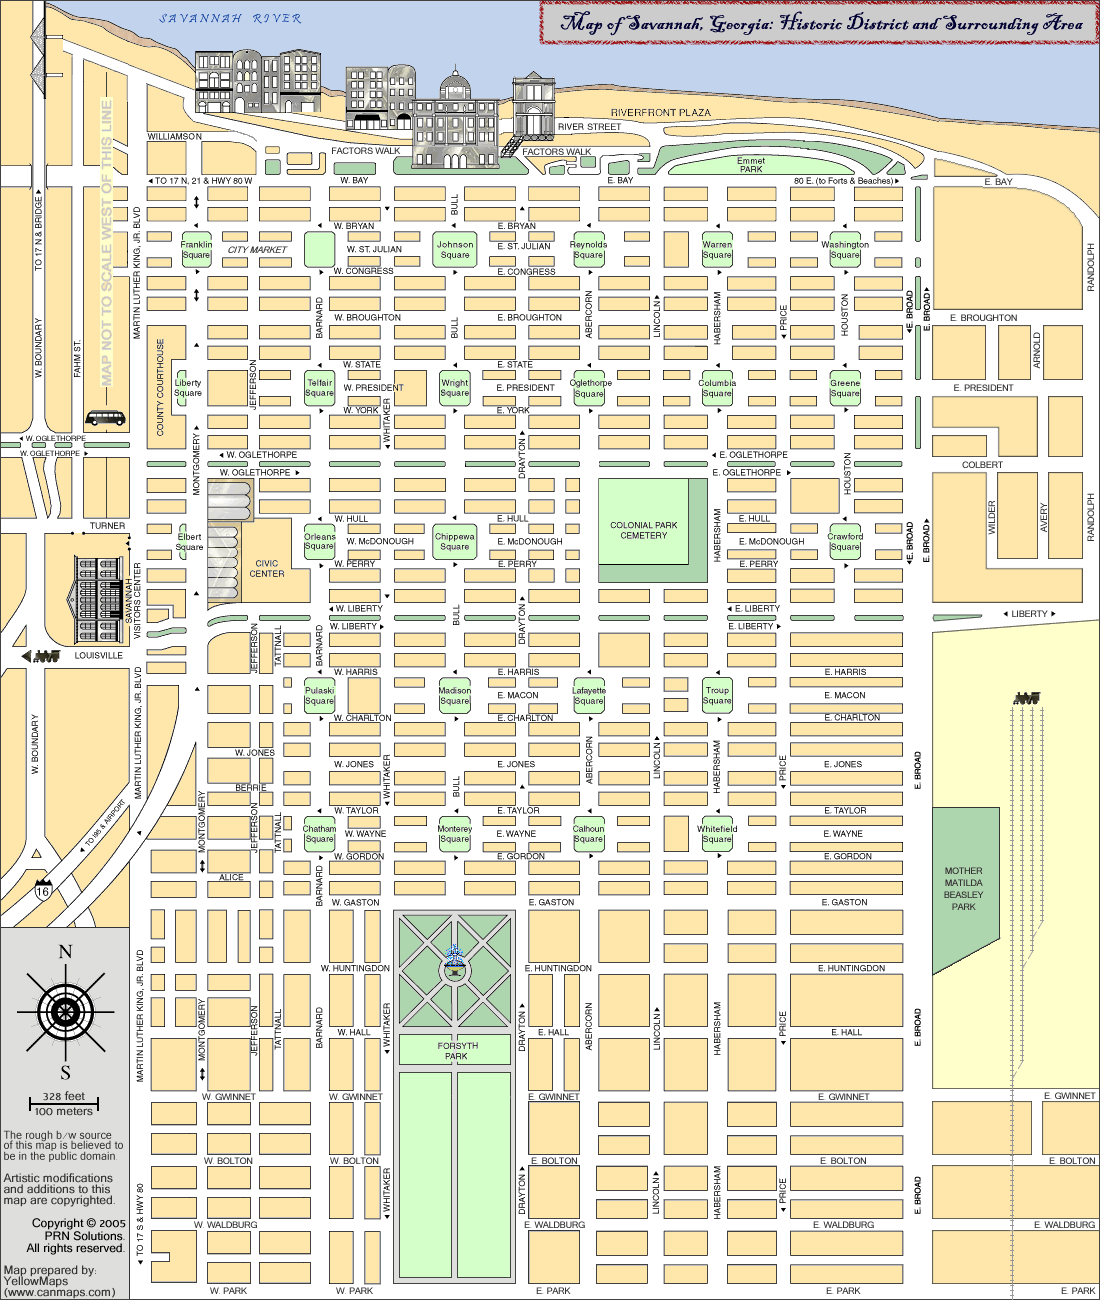 Printable Map of Savannah Historic District, Georgia